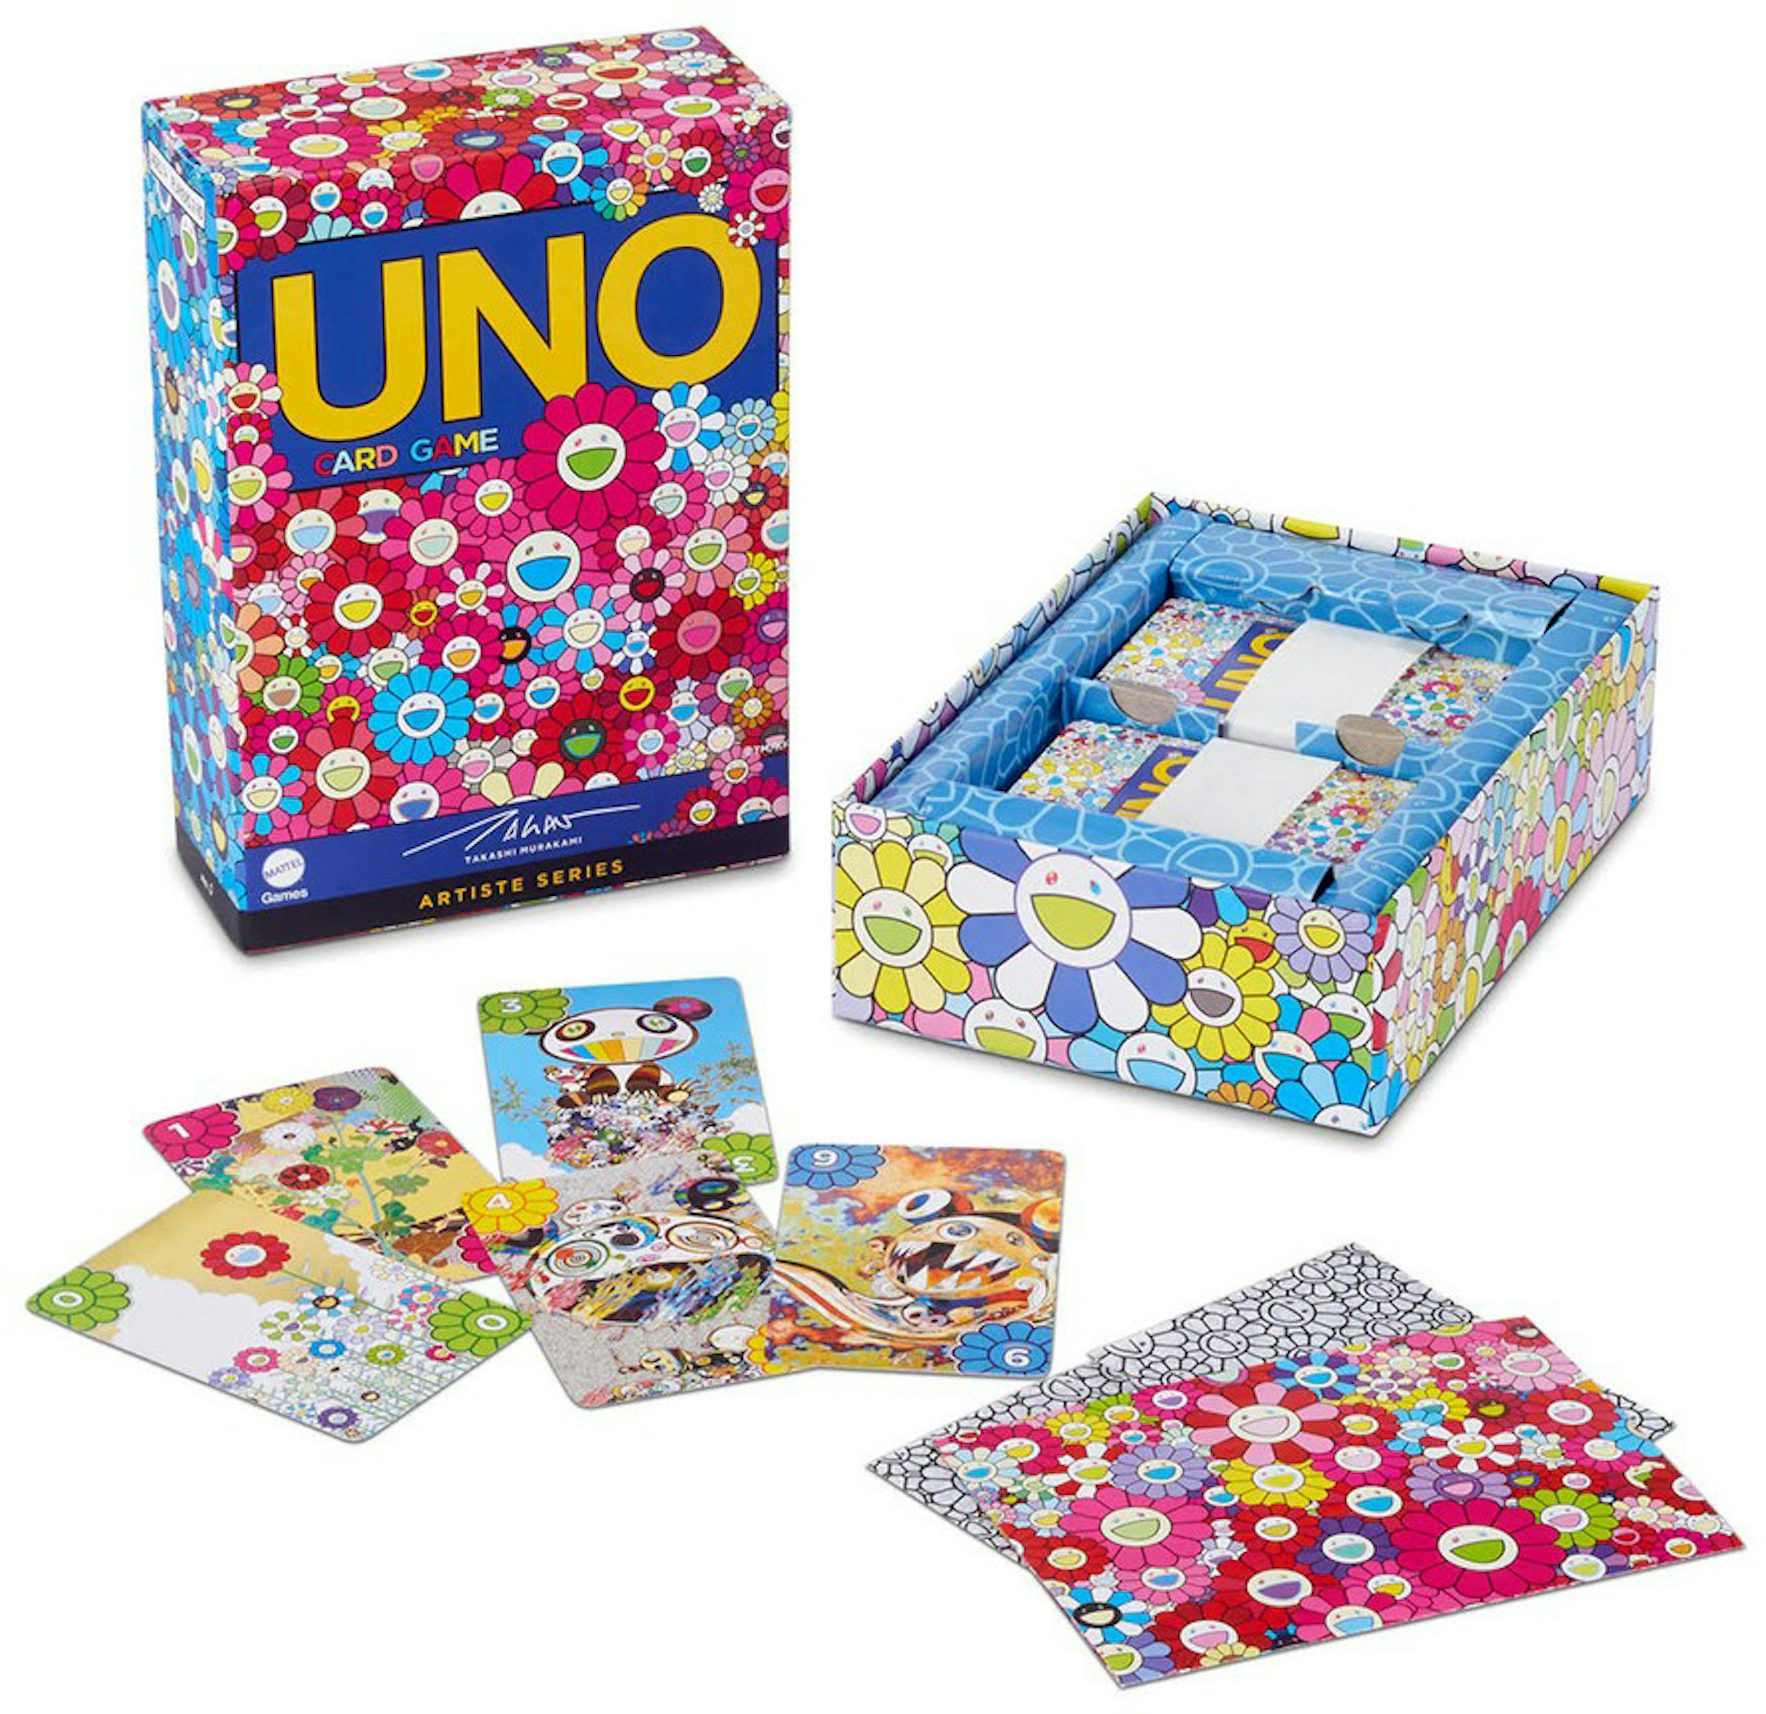 Takashi Murakami creates limited-edition UNO deck for Mattel